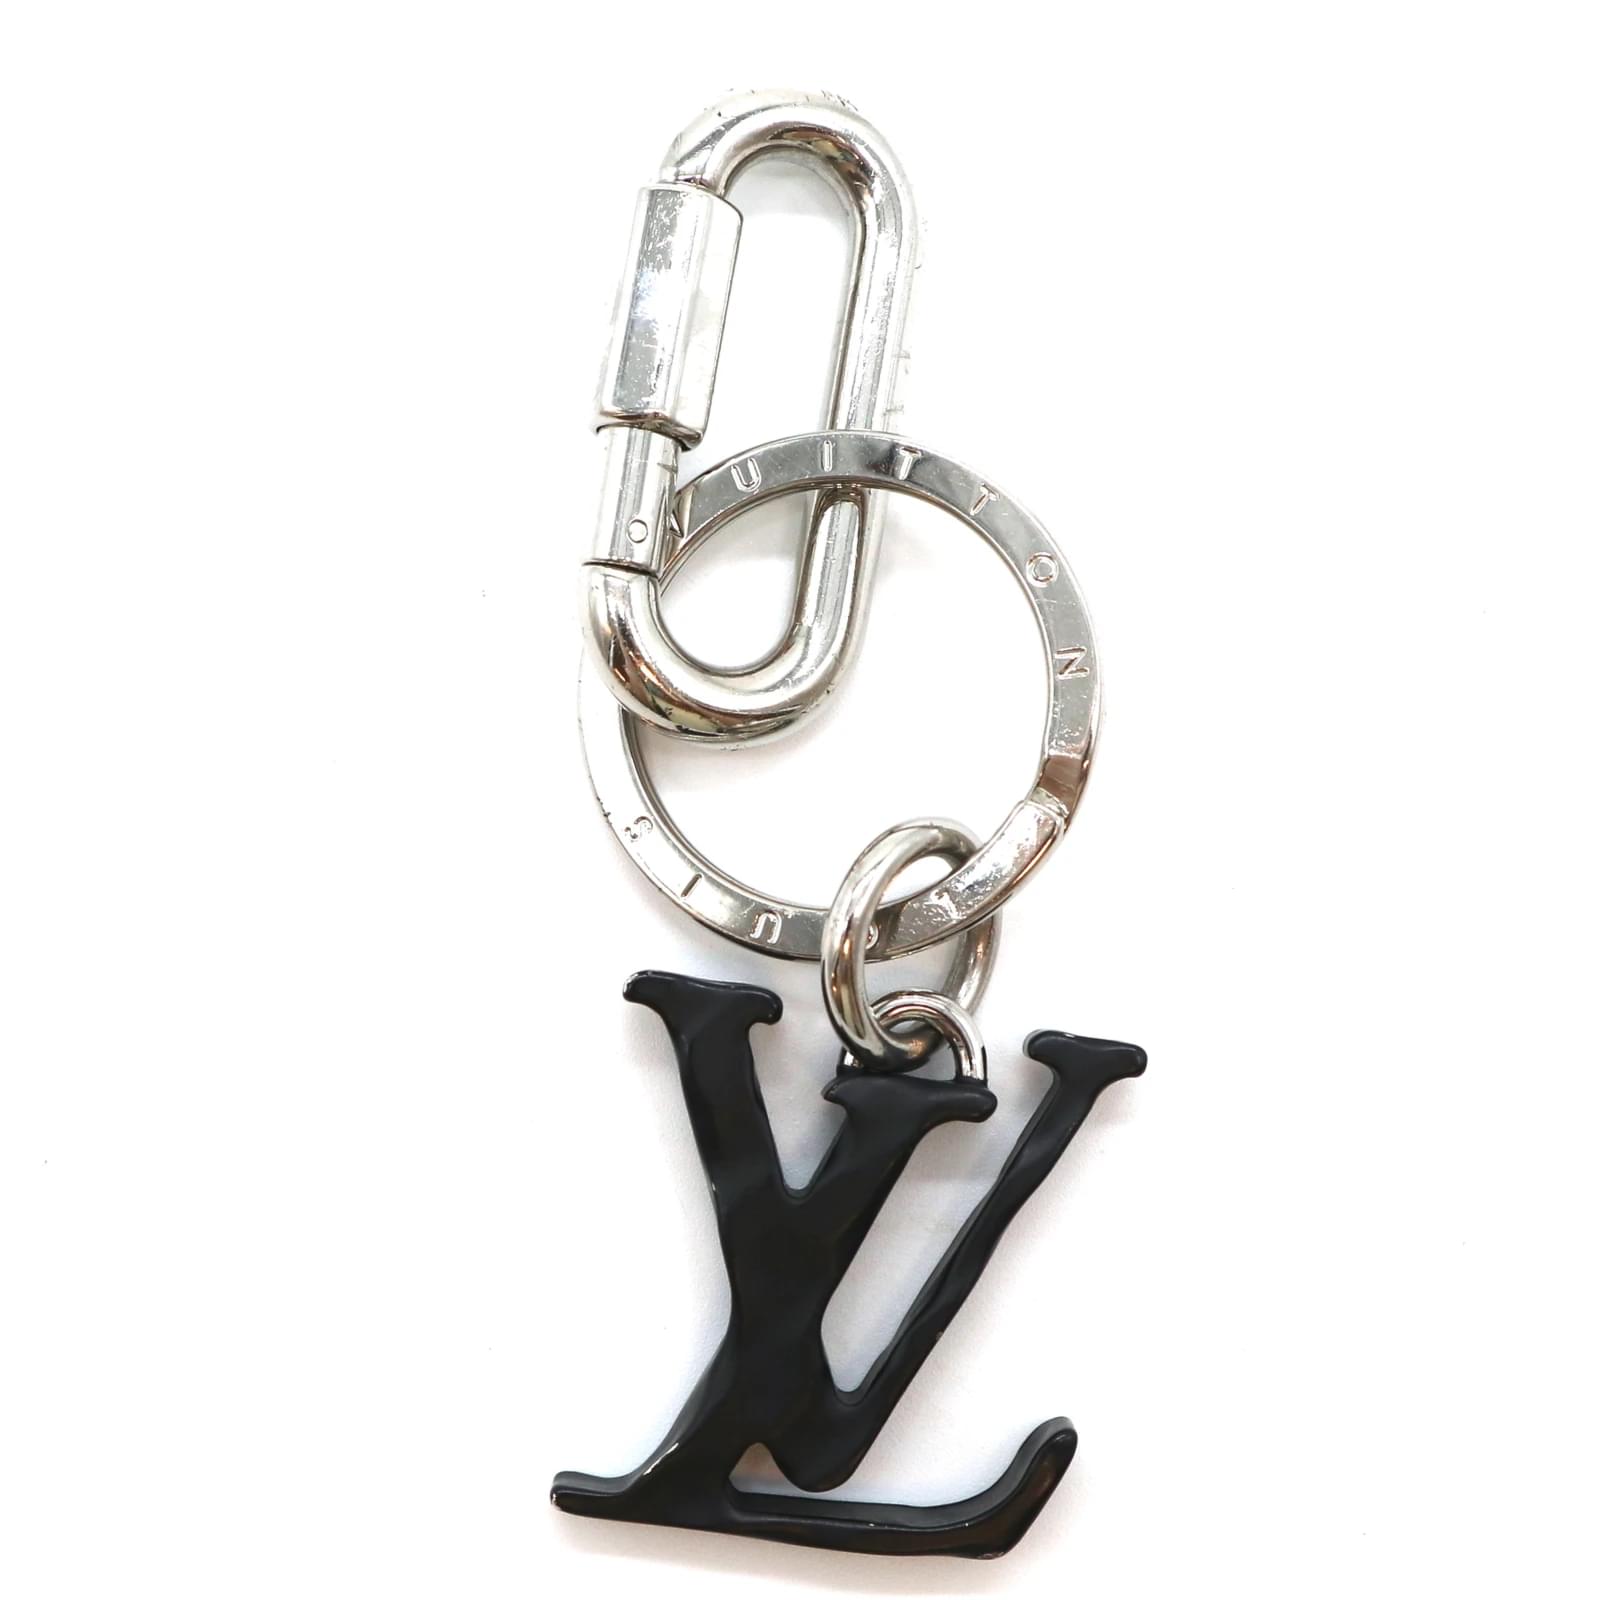 Authentic Louis Vuitton Keychain 